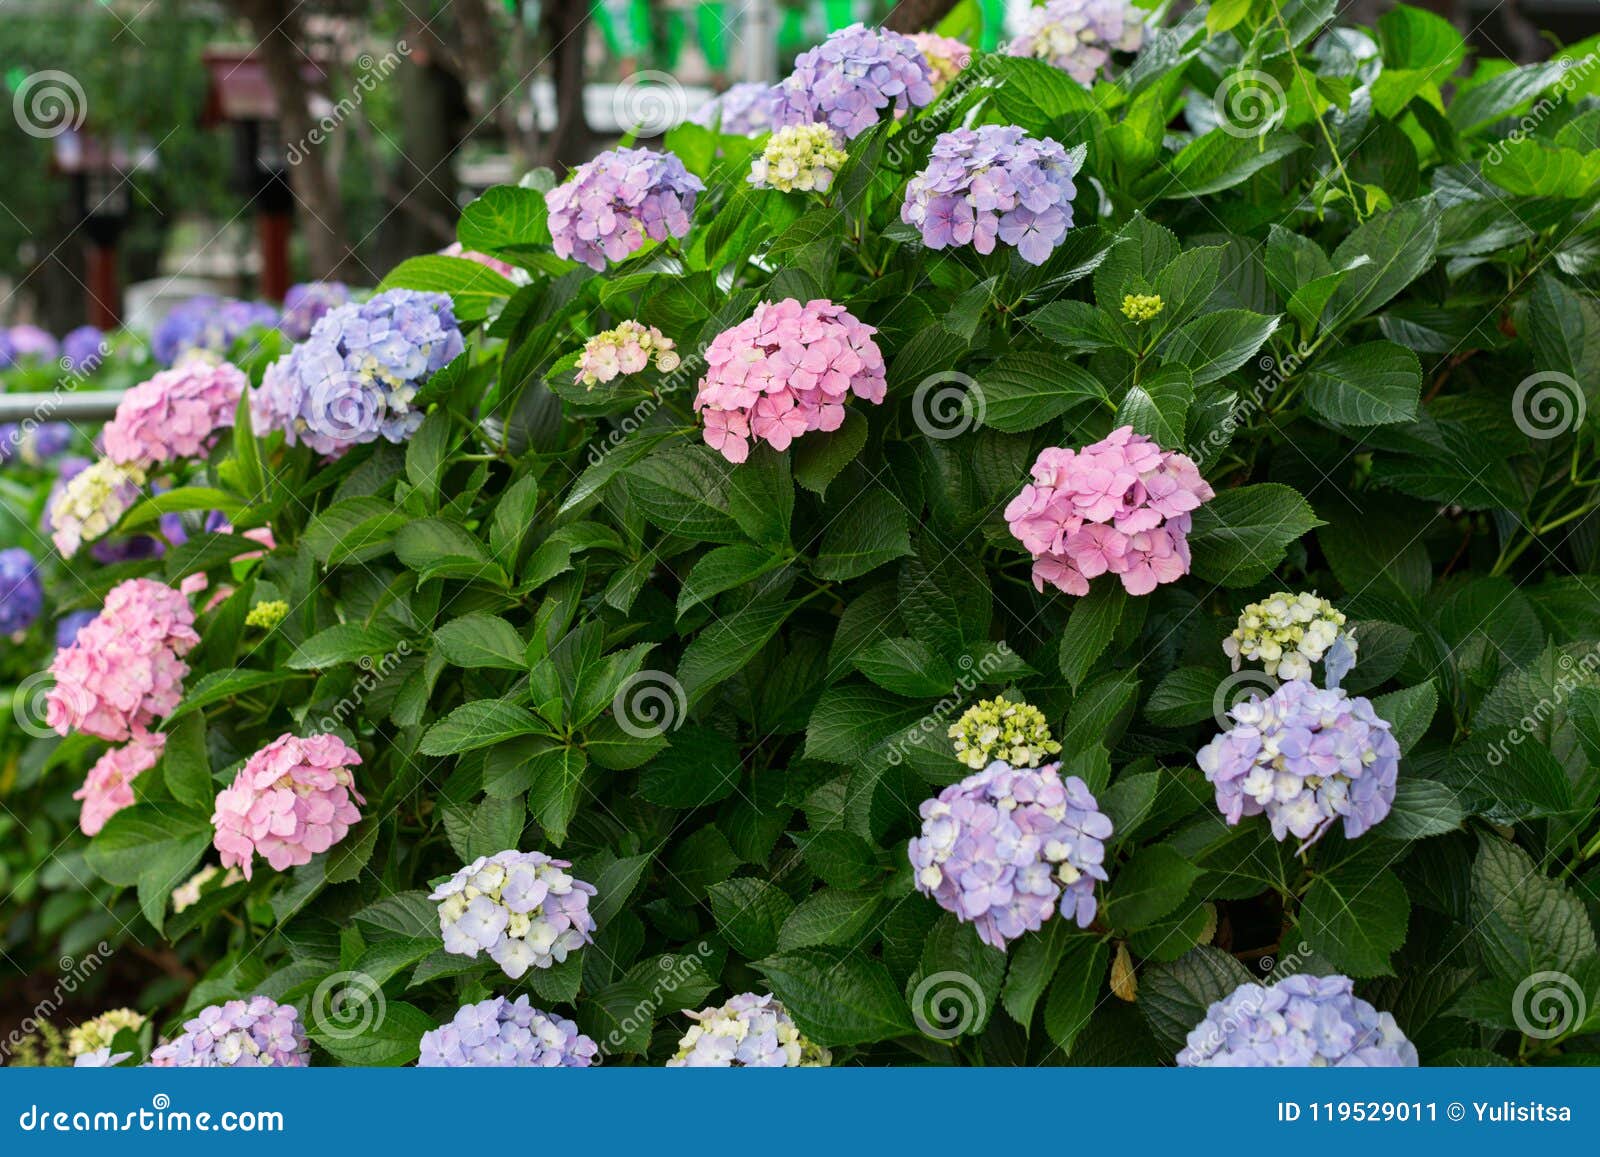 The Bush Of Pink And Purple Hydrangeas Flowers Ajisai Stock Image Image Of Festival Garden